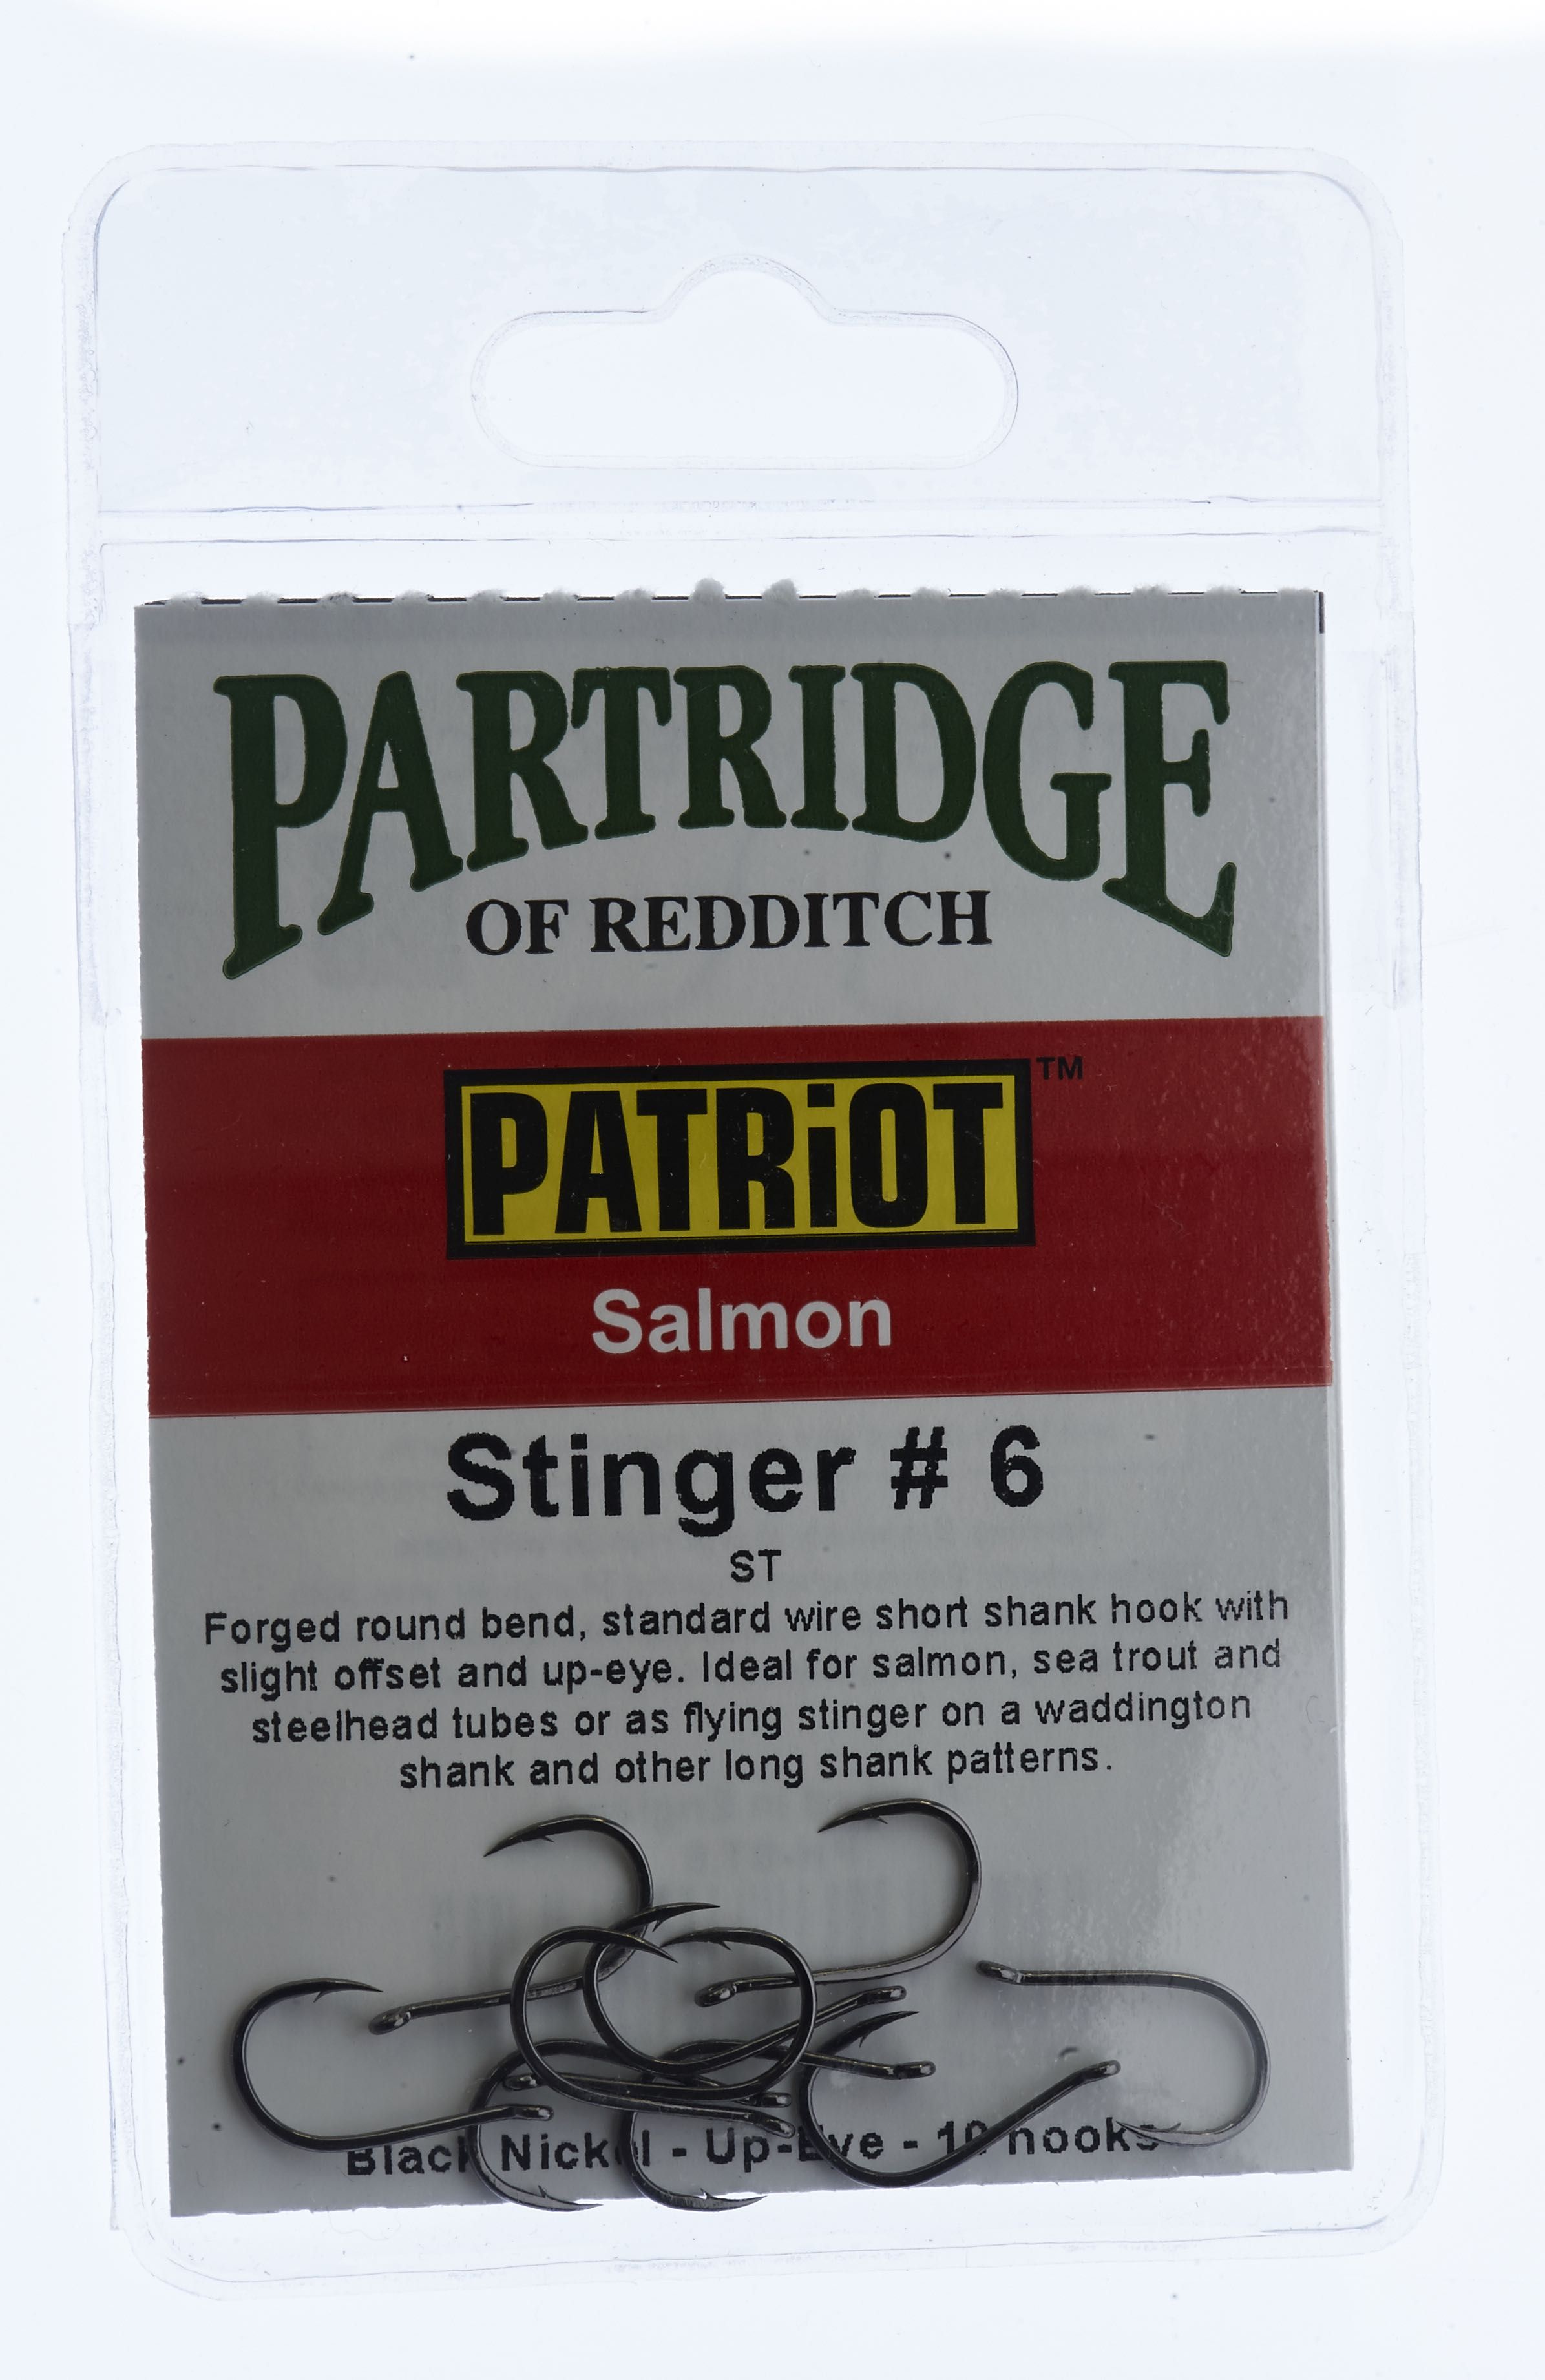 Partridge Patriot Stinger # 6 tube fly hook